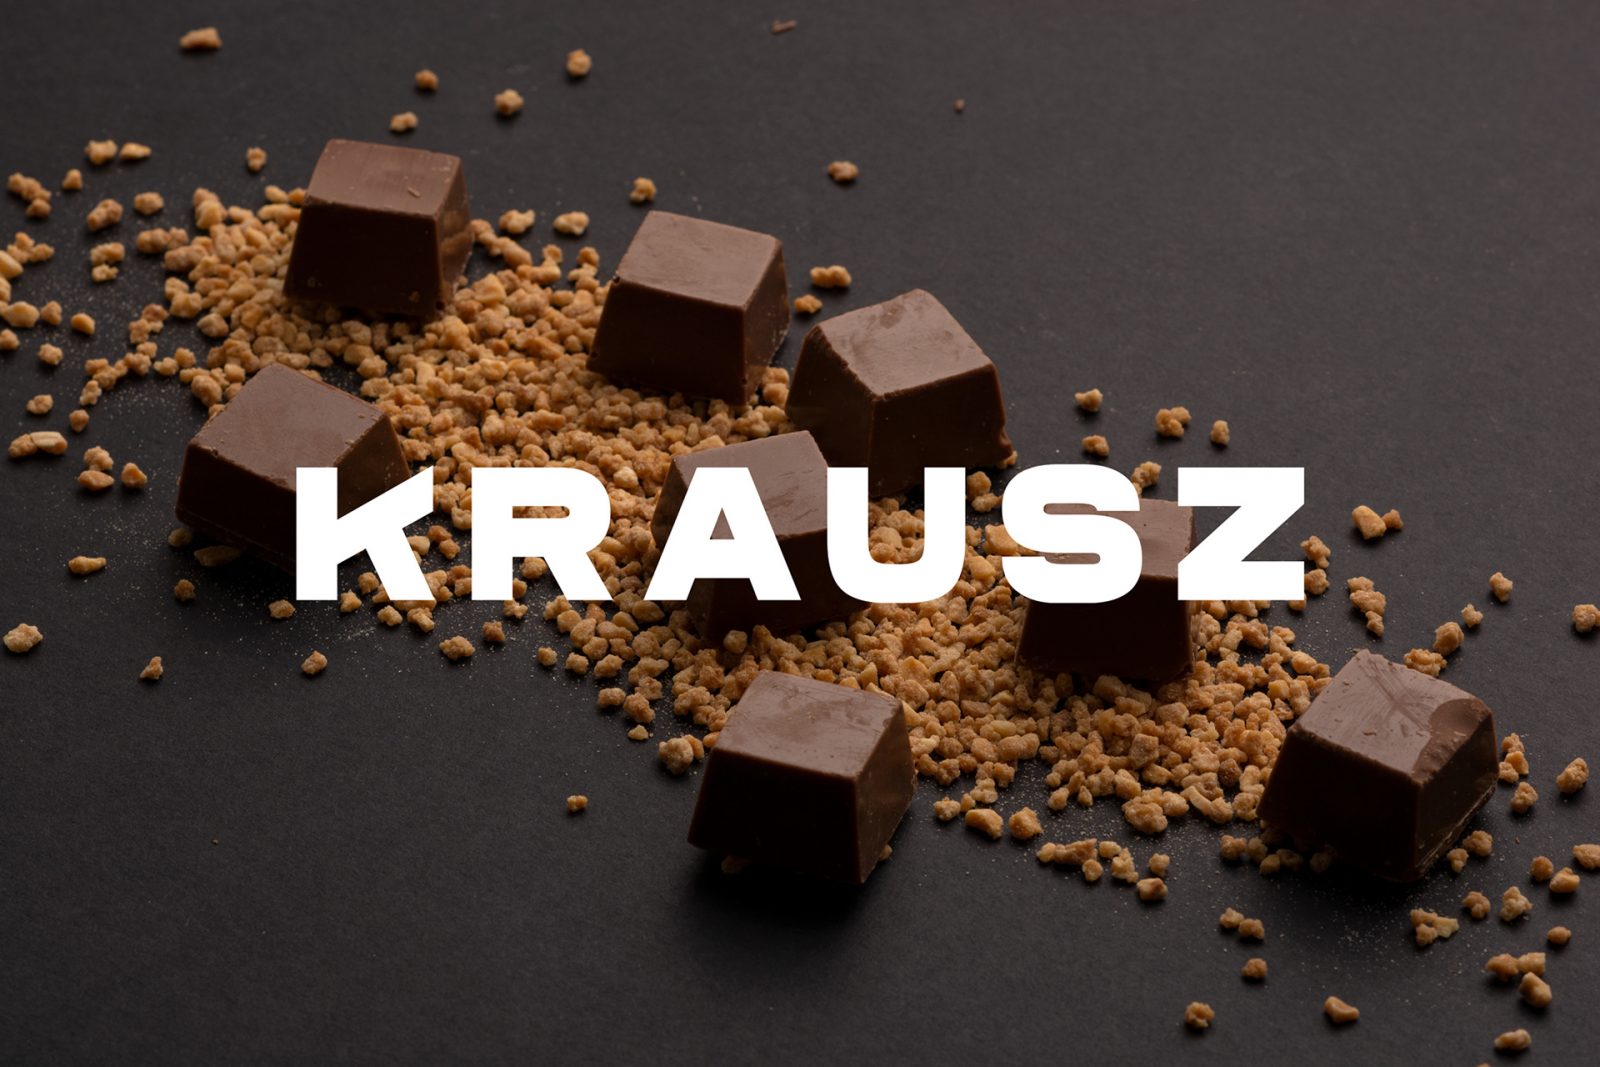 Chocolate Confectionery Krausz Packaging & Branding by Peltan-Brosz Studio